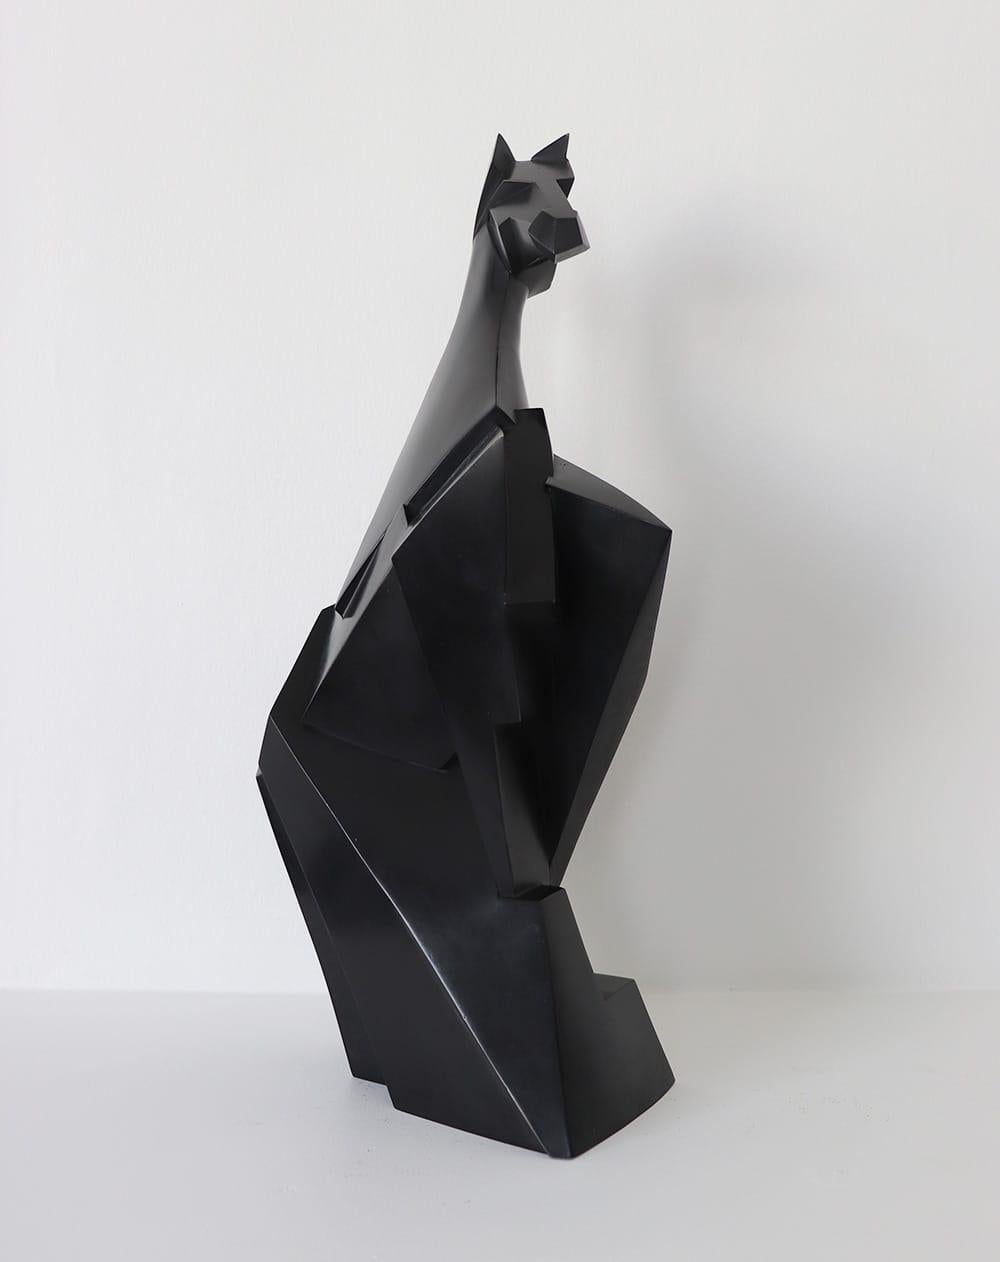 Kionero by Jacques Owczarek - Contemporary bronze sculpture, horse, animal For Sale 2